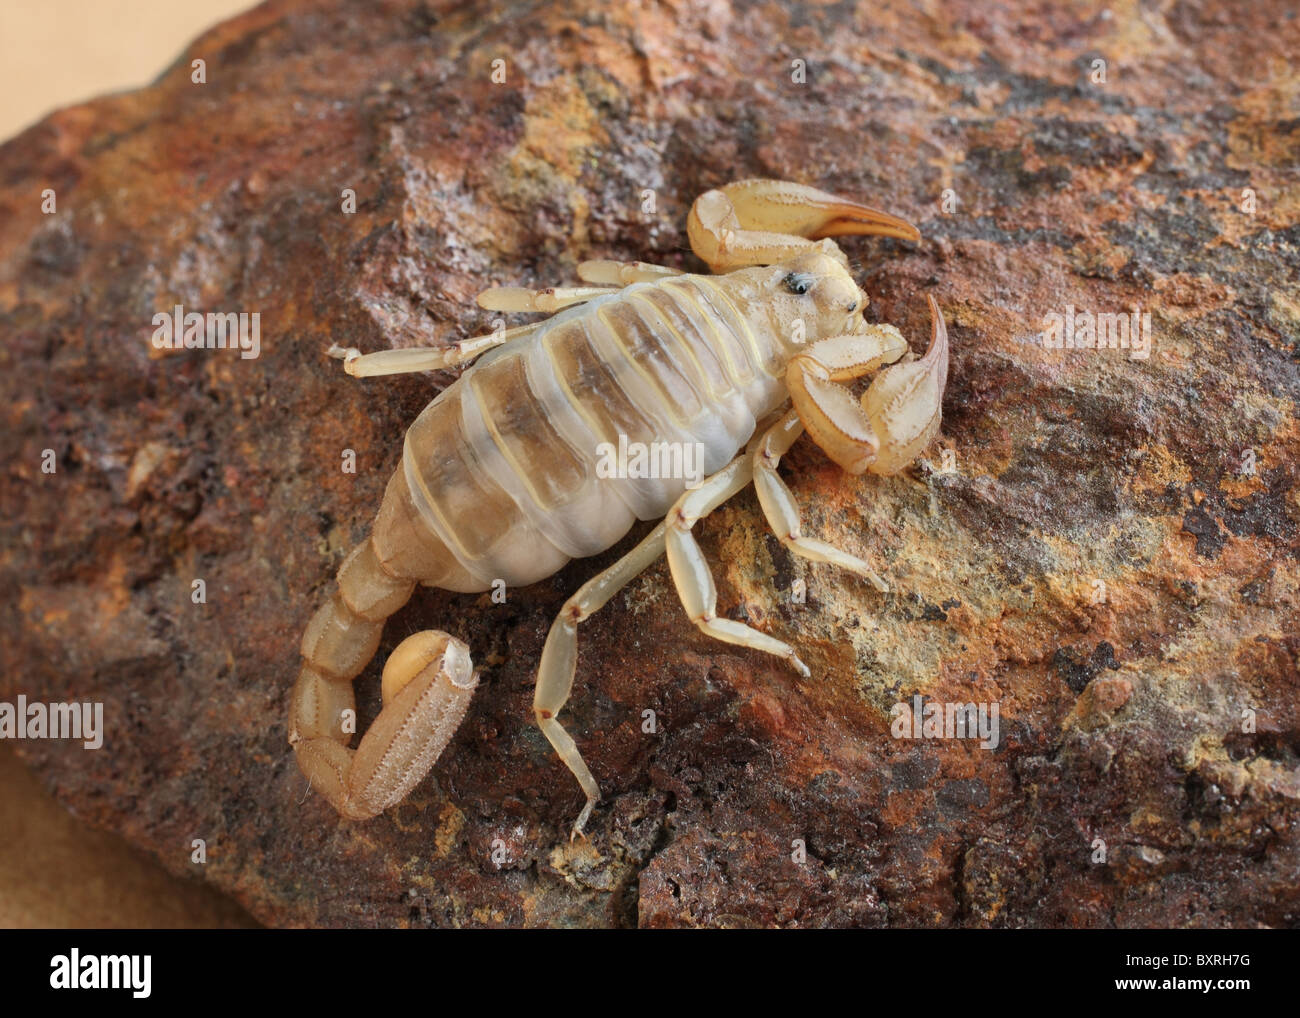 American desert scorpion standing on a rock close up Stock Photo